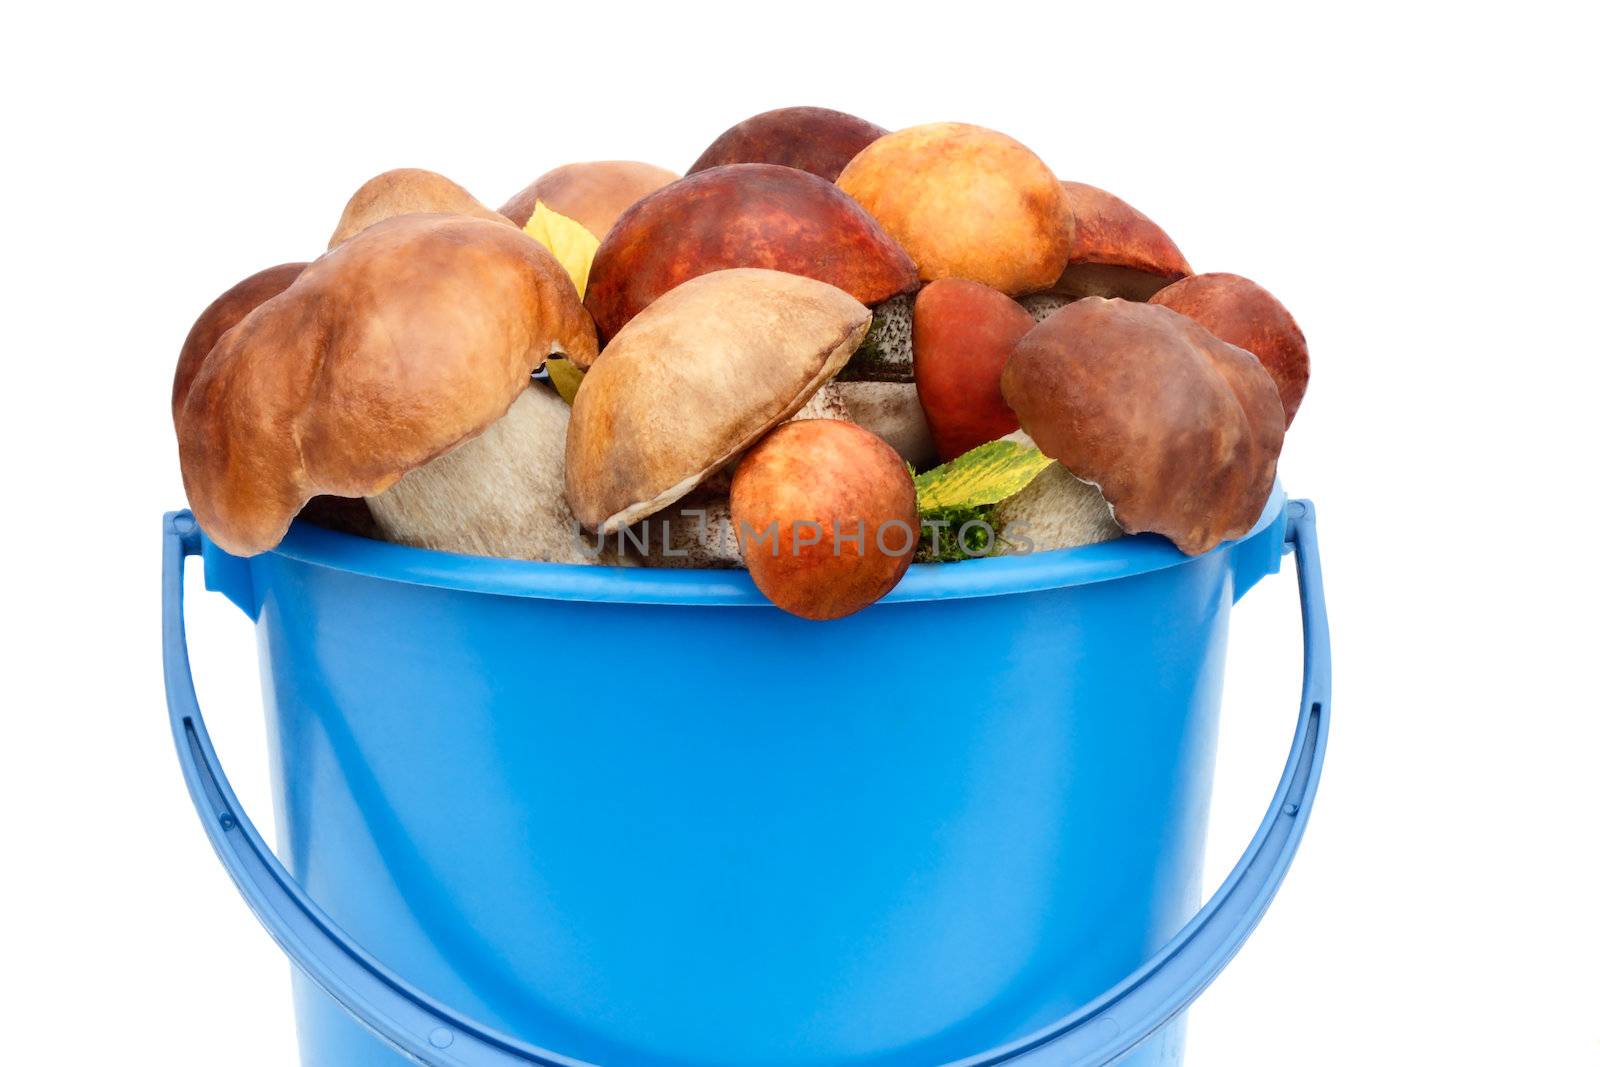 Mushrooms, aspen mushrooms, white, boletus in the bucket on a wh by georgina198